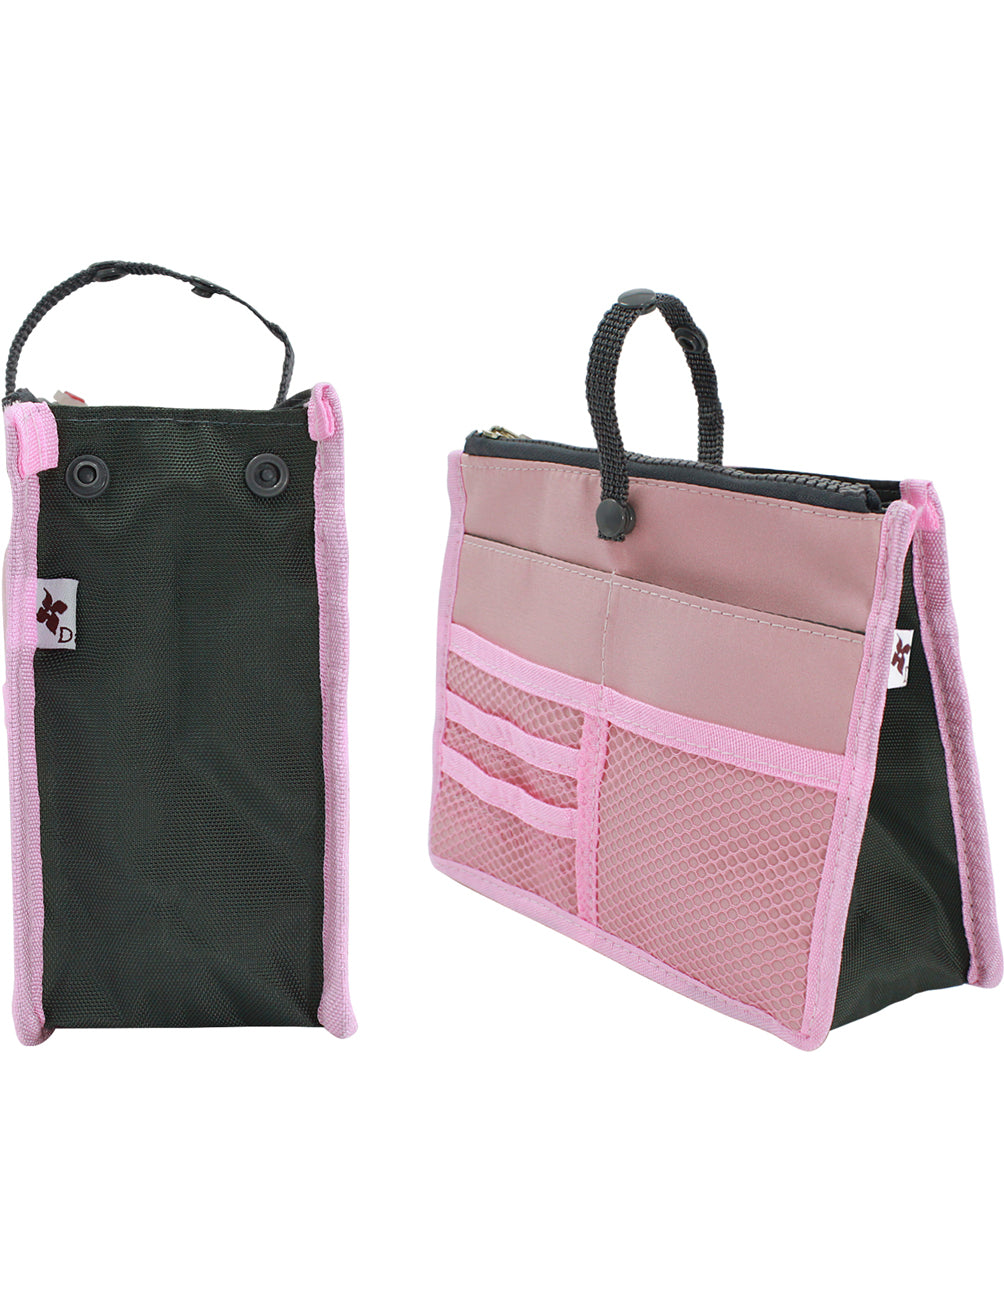 Dahlia Nifty Patented Handbag Purse Organizer Insert 18 Compartments Black